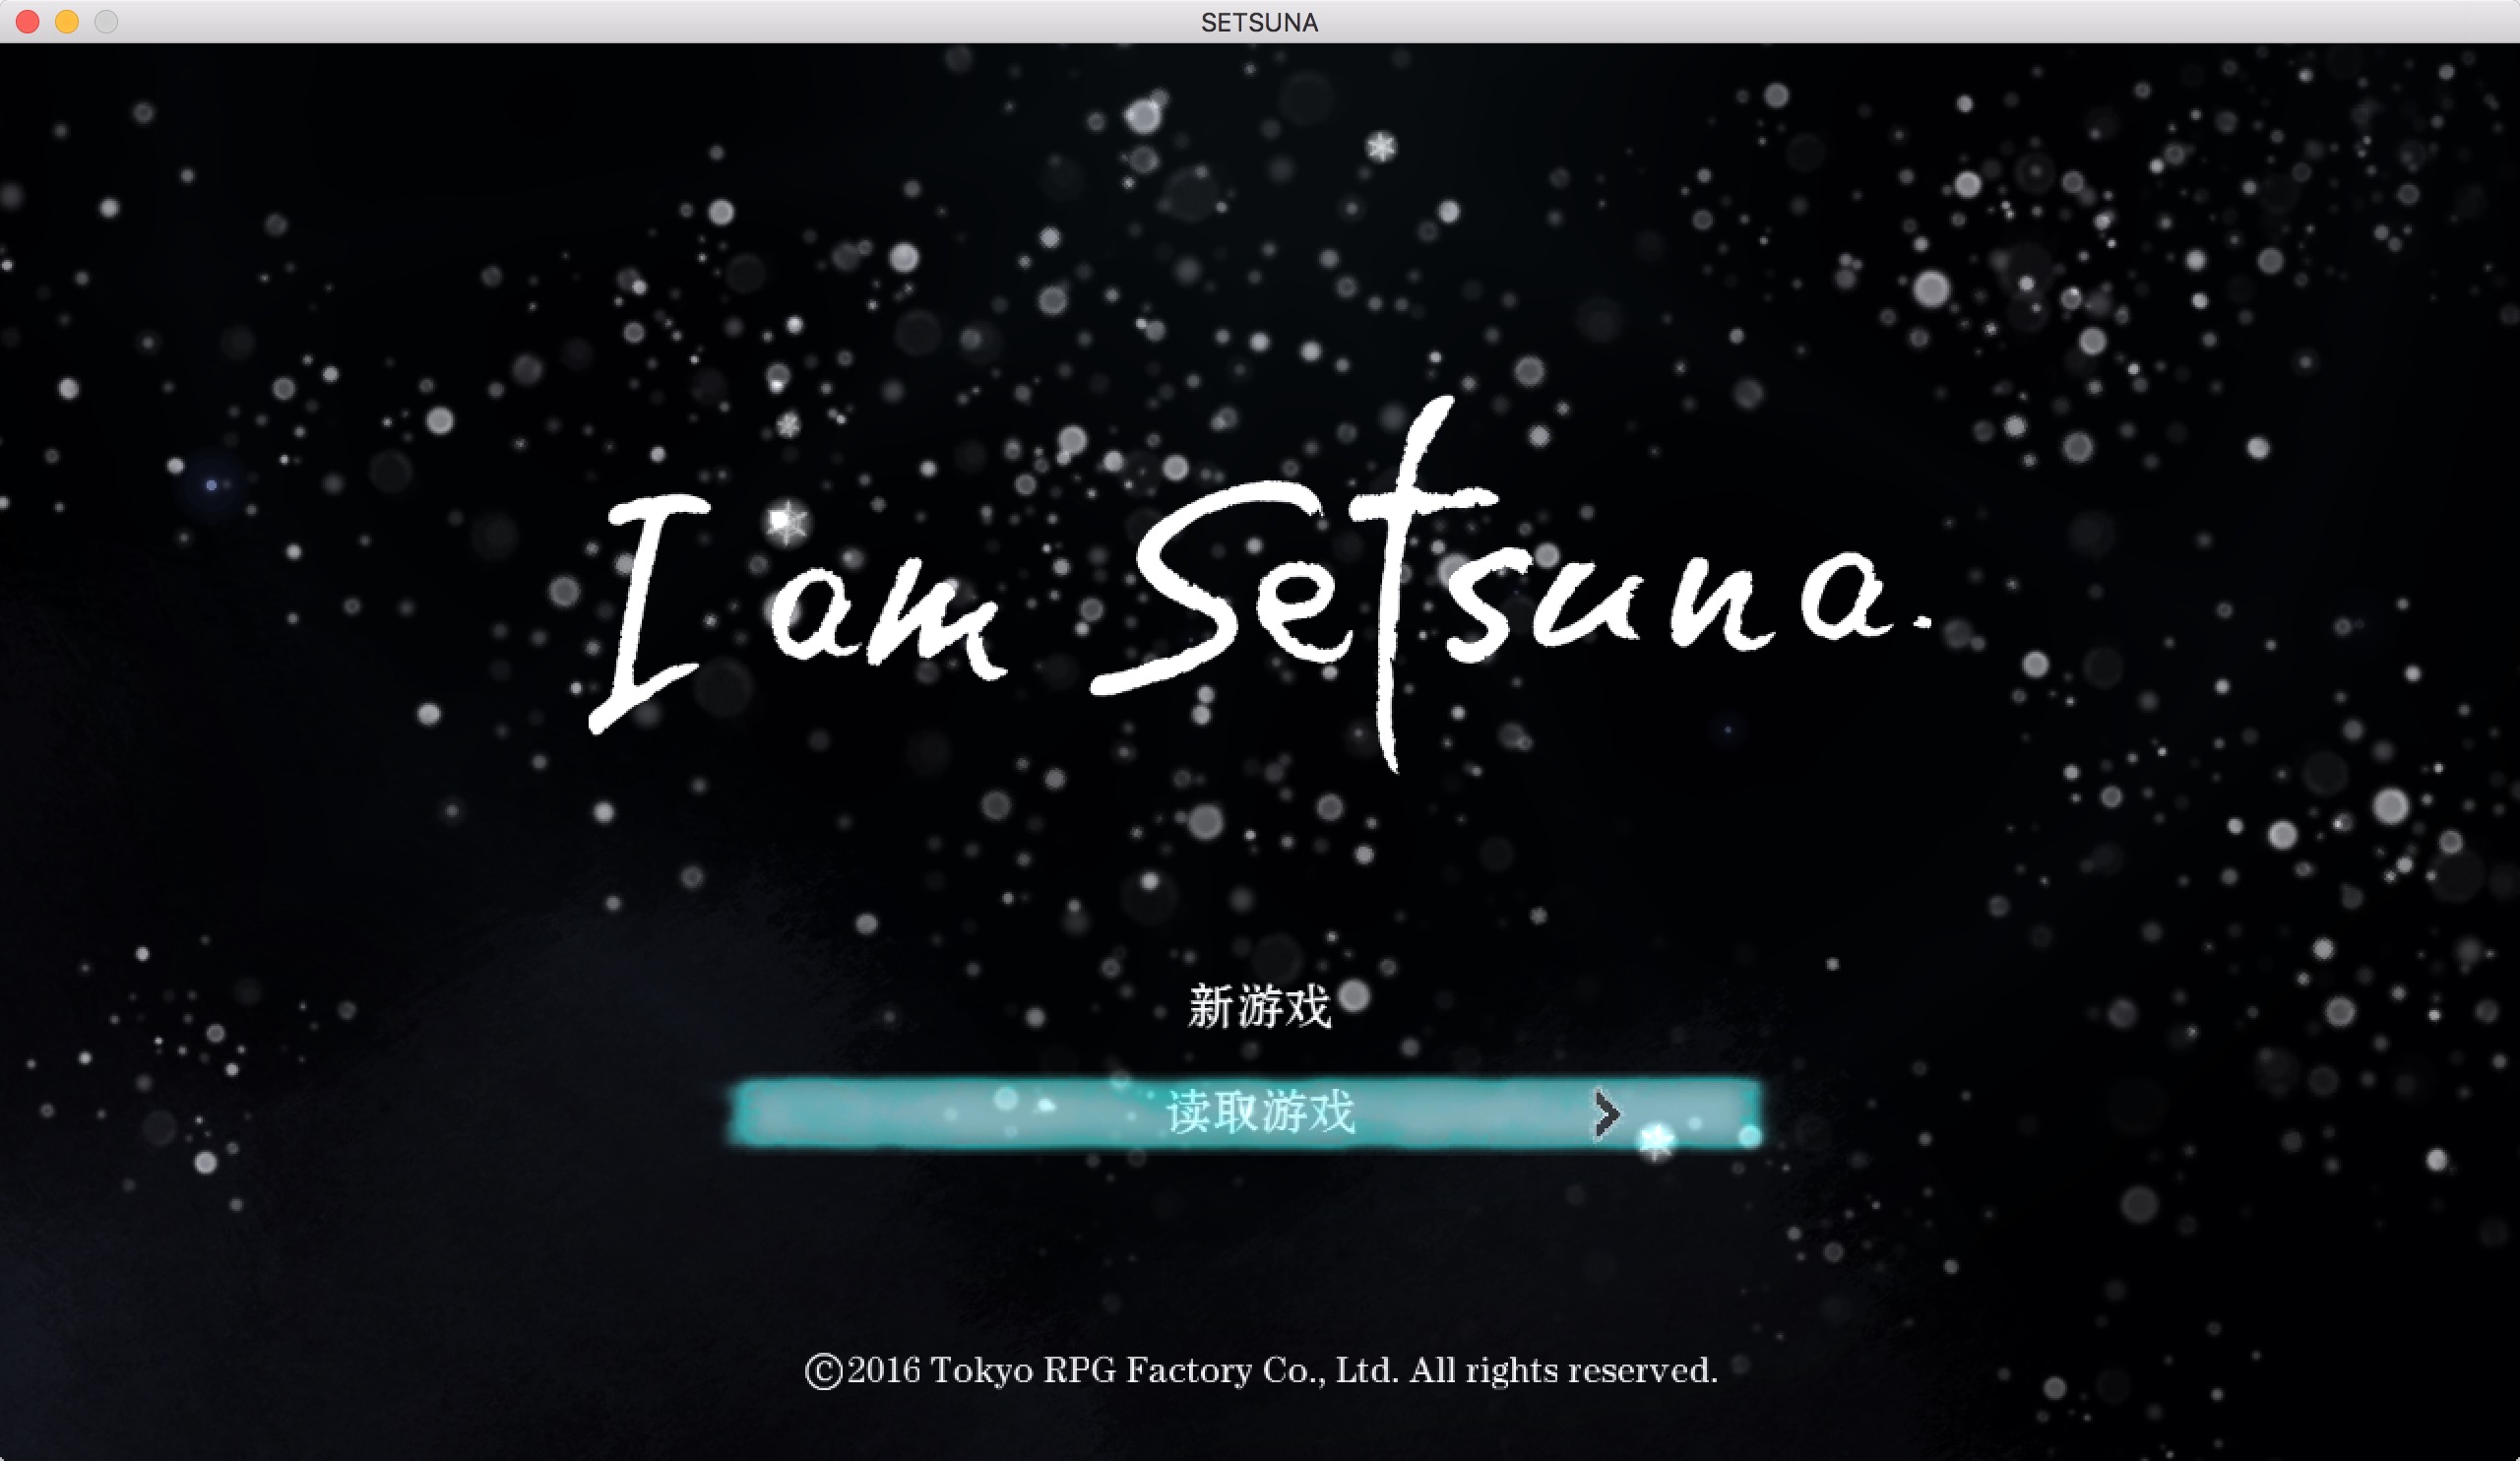 祭品与雪之刹那 2.0 for Mac|Mac版下载 | I am setsuna